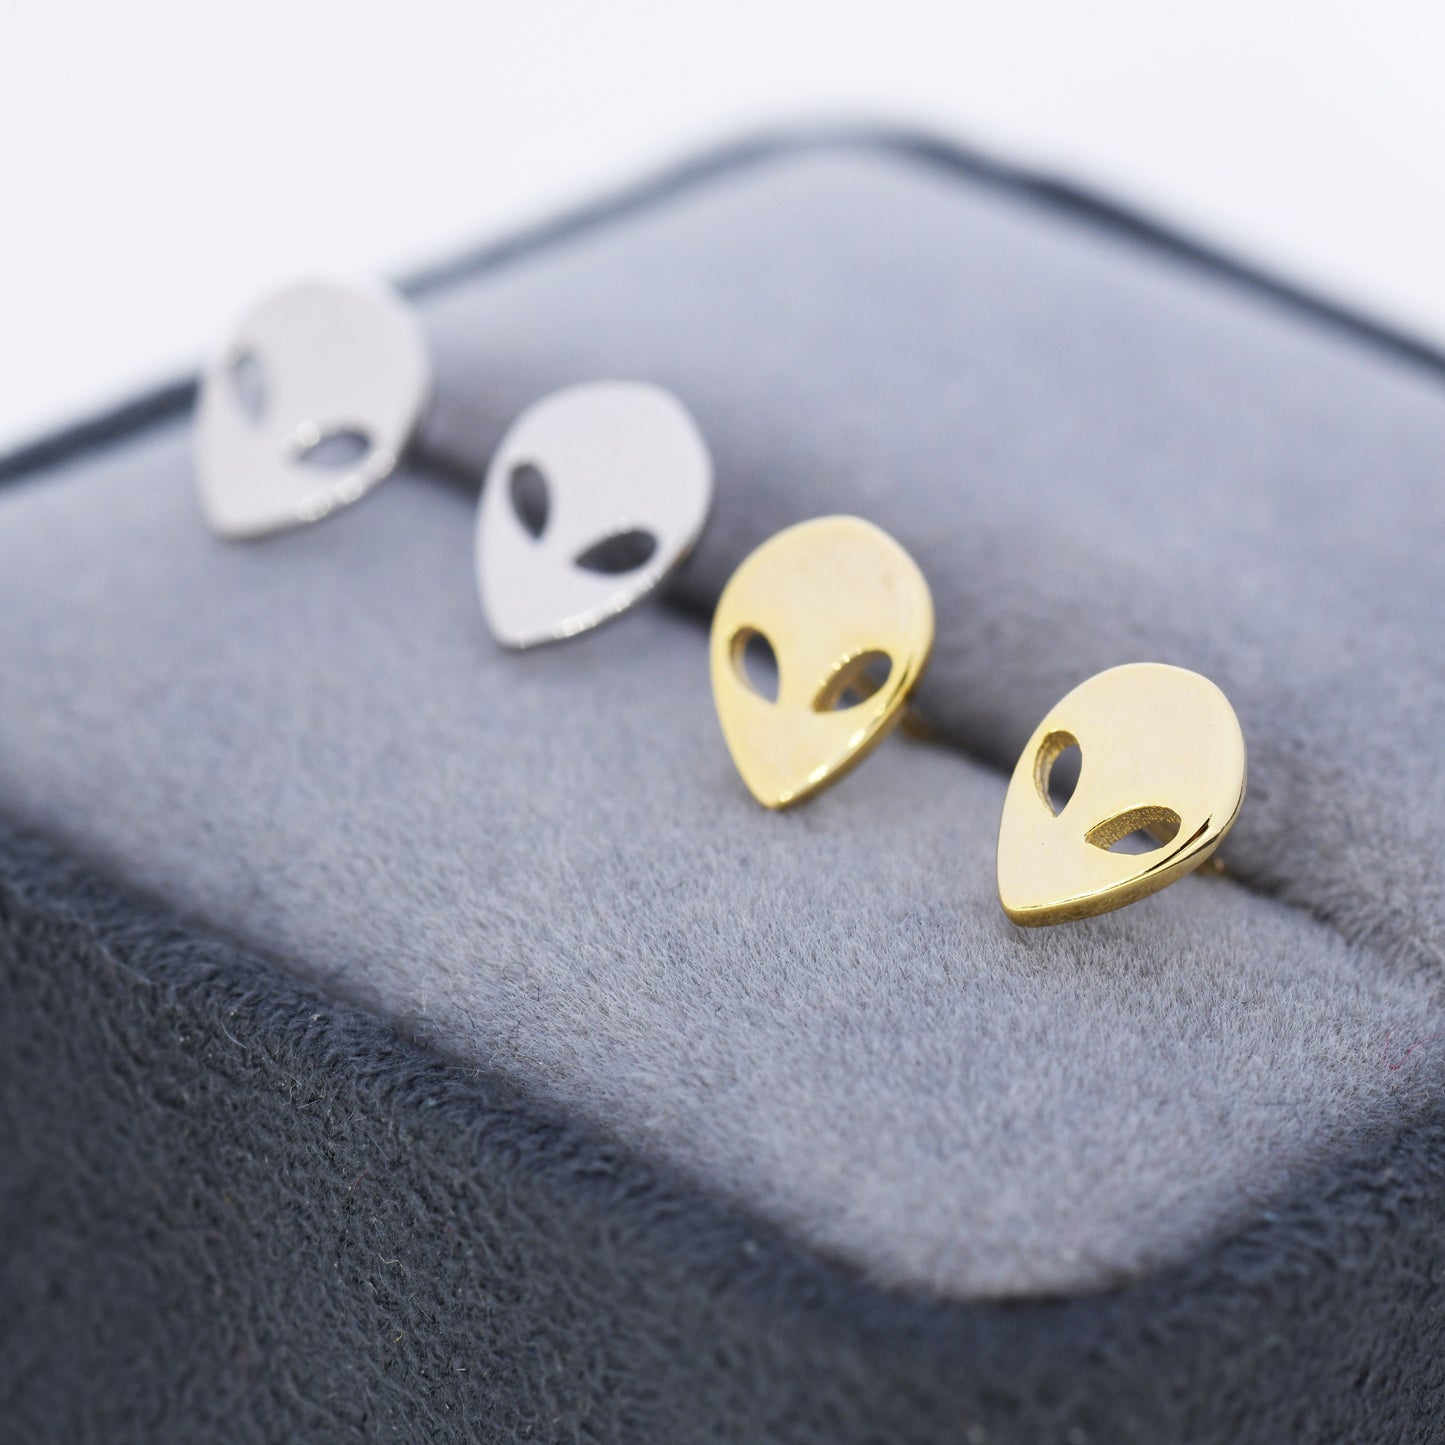 Alien Stud Earrings in Sterling Silver, Silver or Gold, UFO Earrings, Fun and Quirky Jewellery